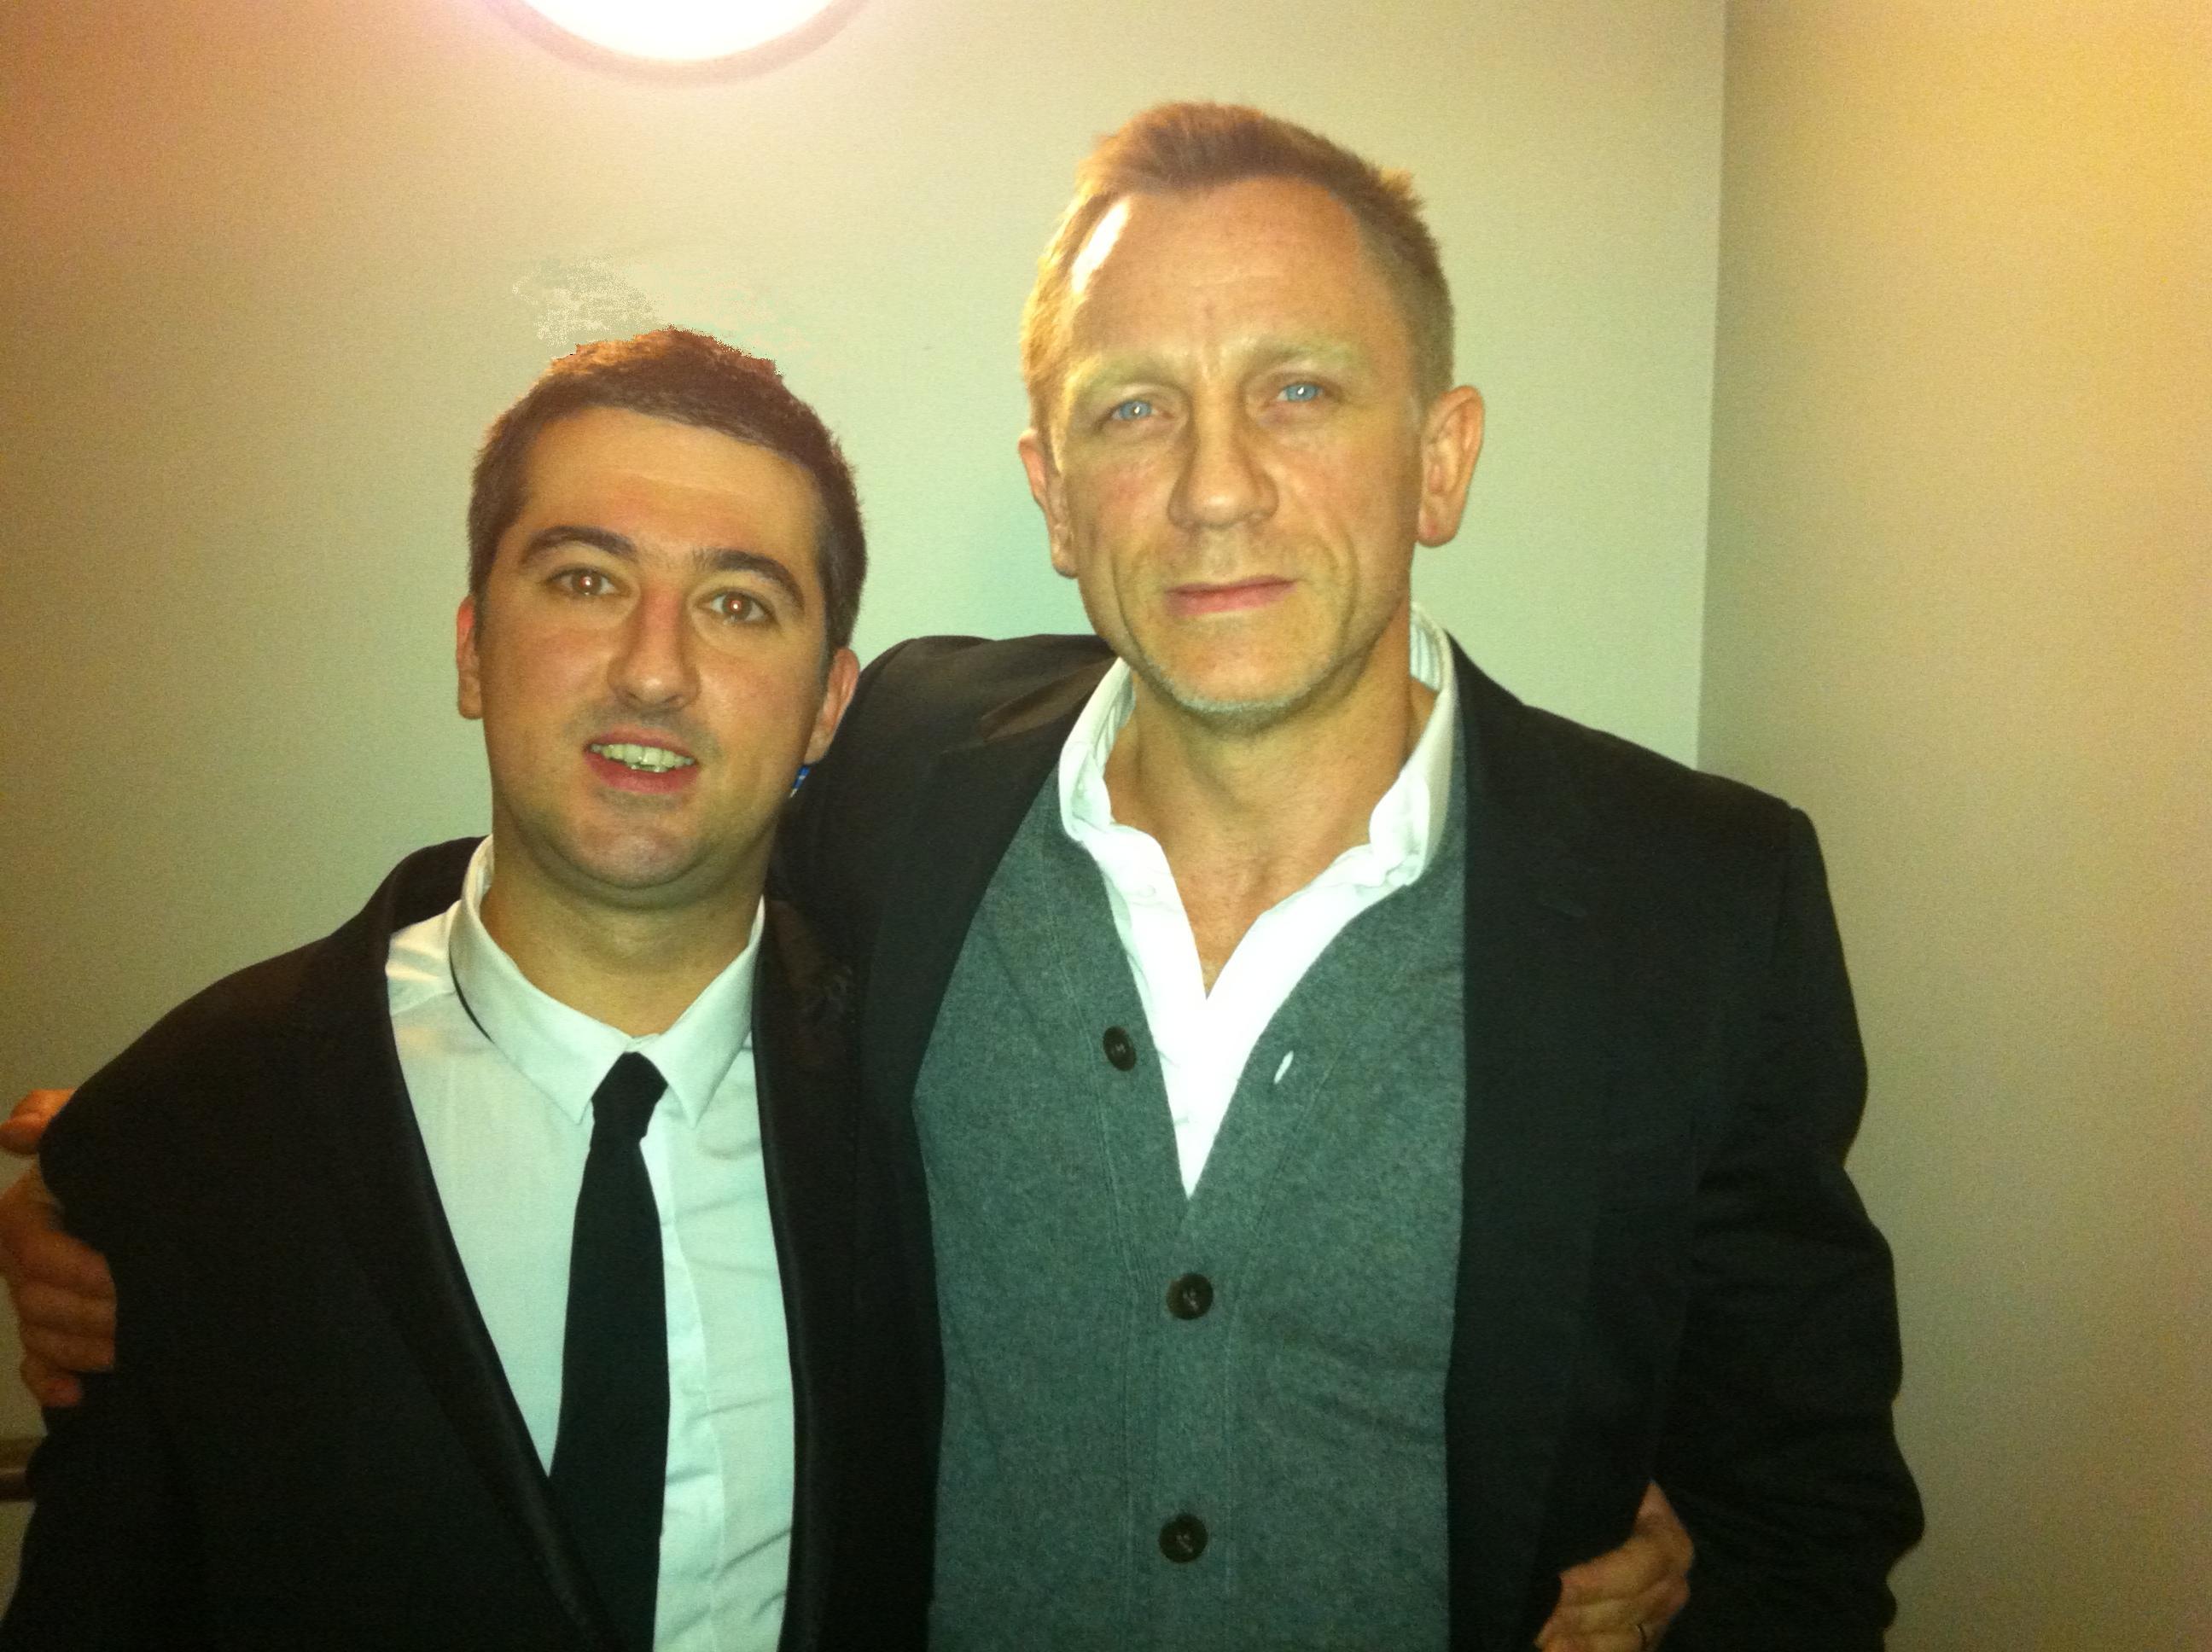 Paul Popplewell & Daniel Craig (presenter of Best Film Award) at The British Independent Film Awards